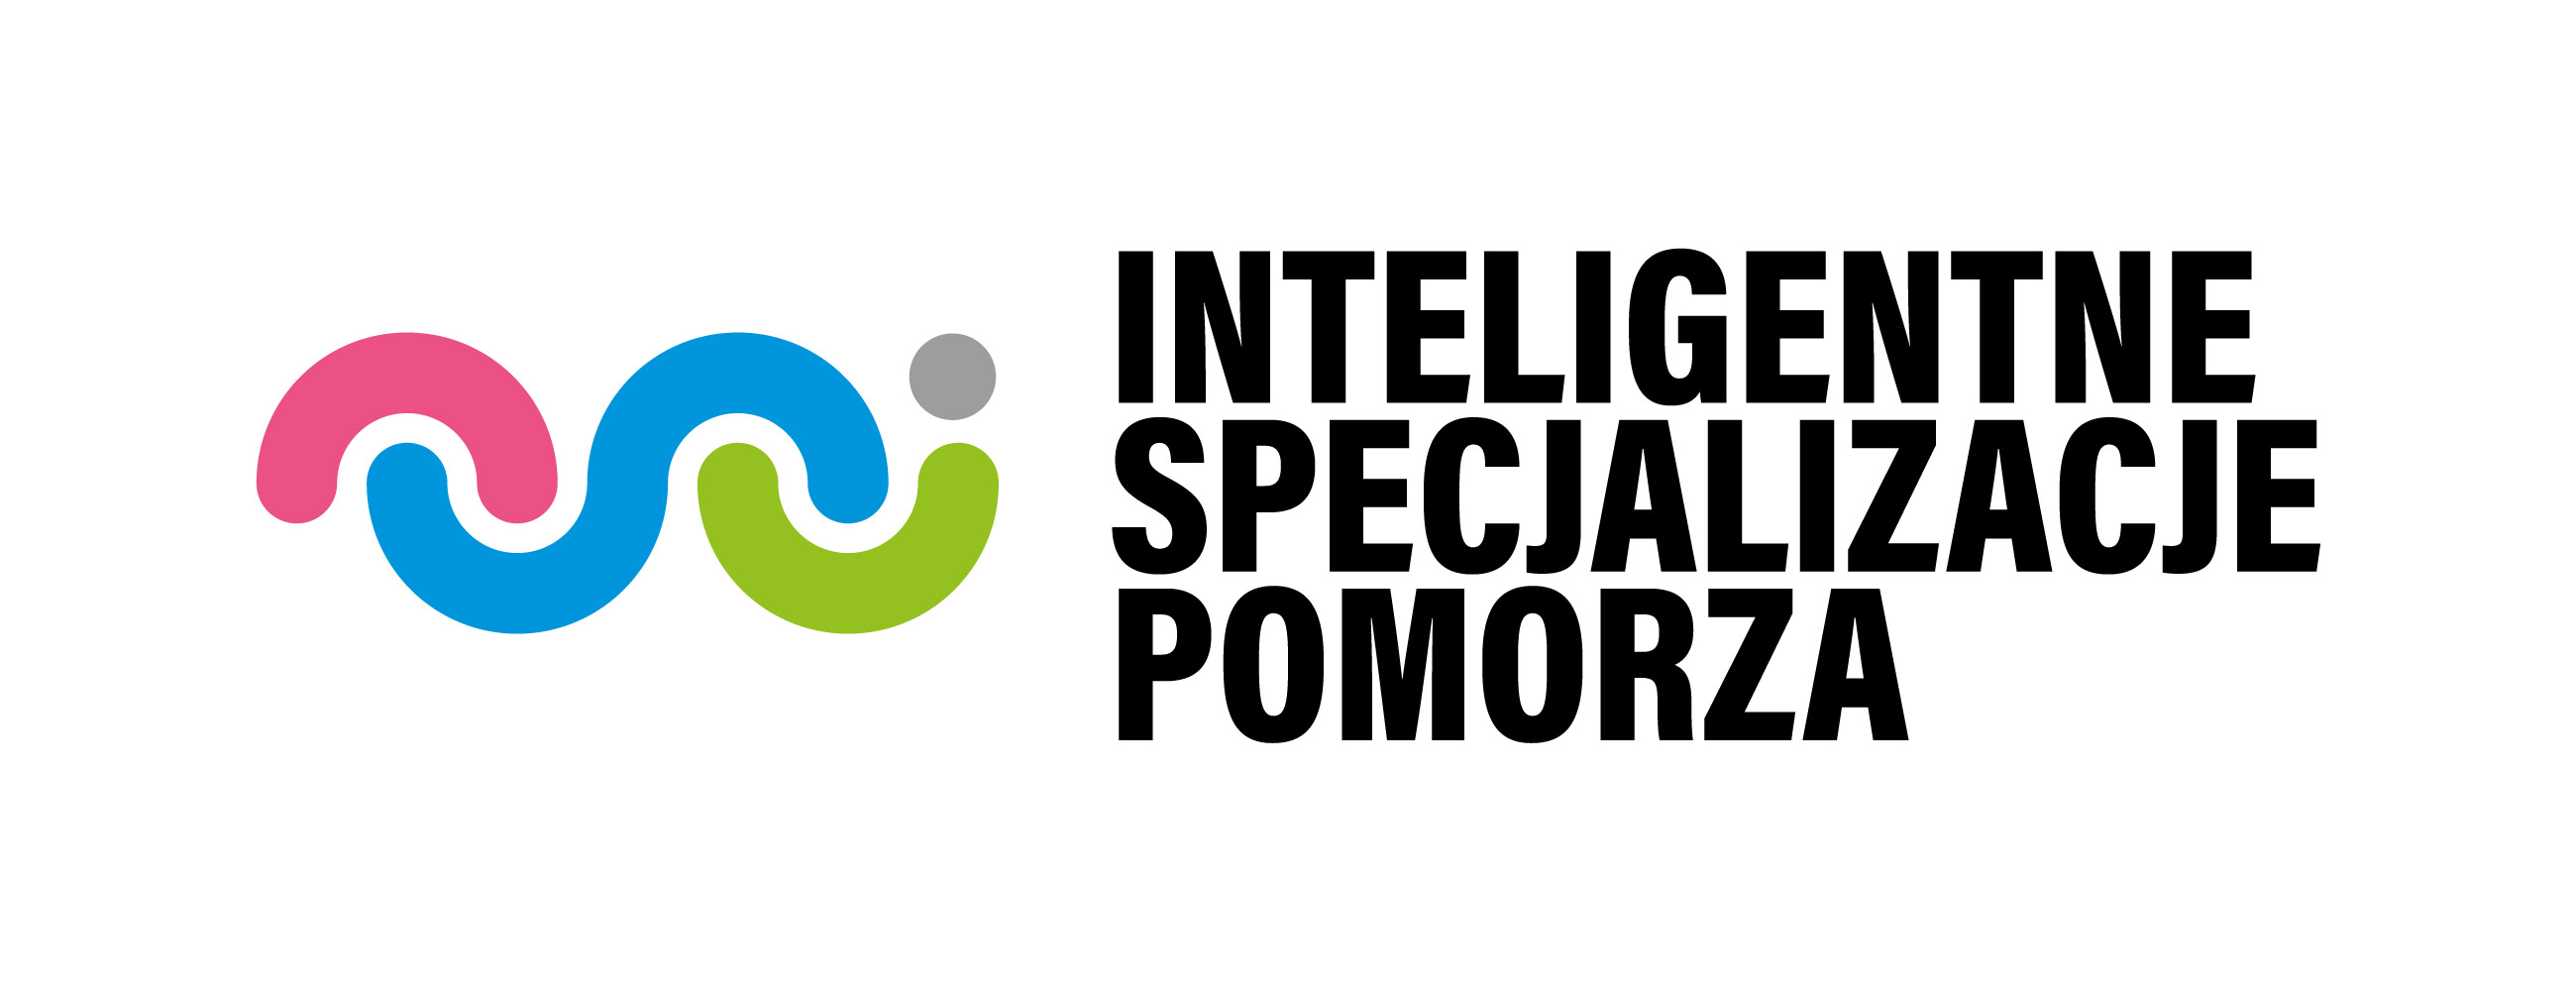 Logo ISP